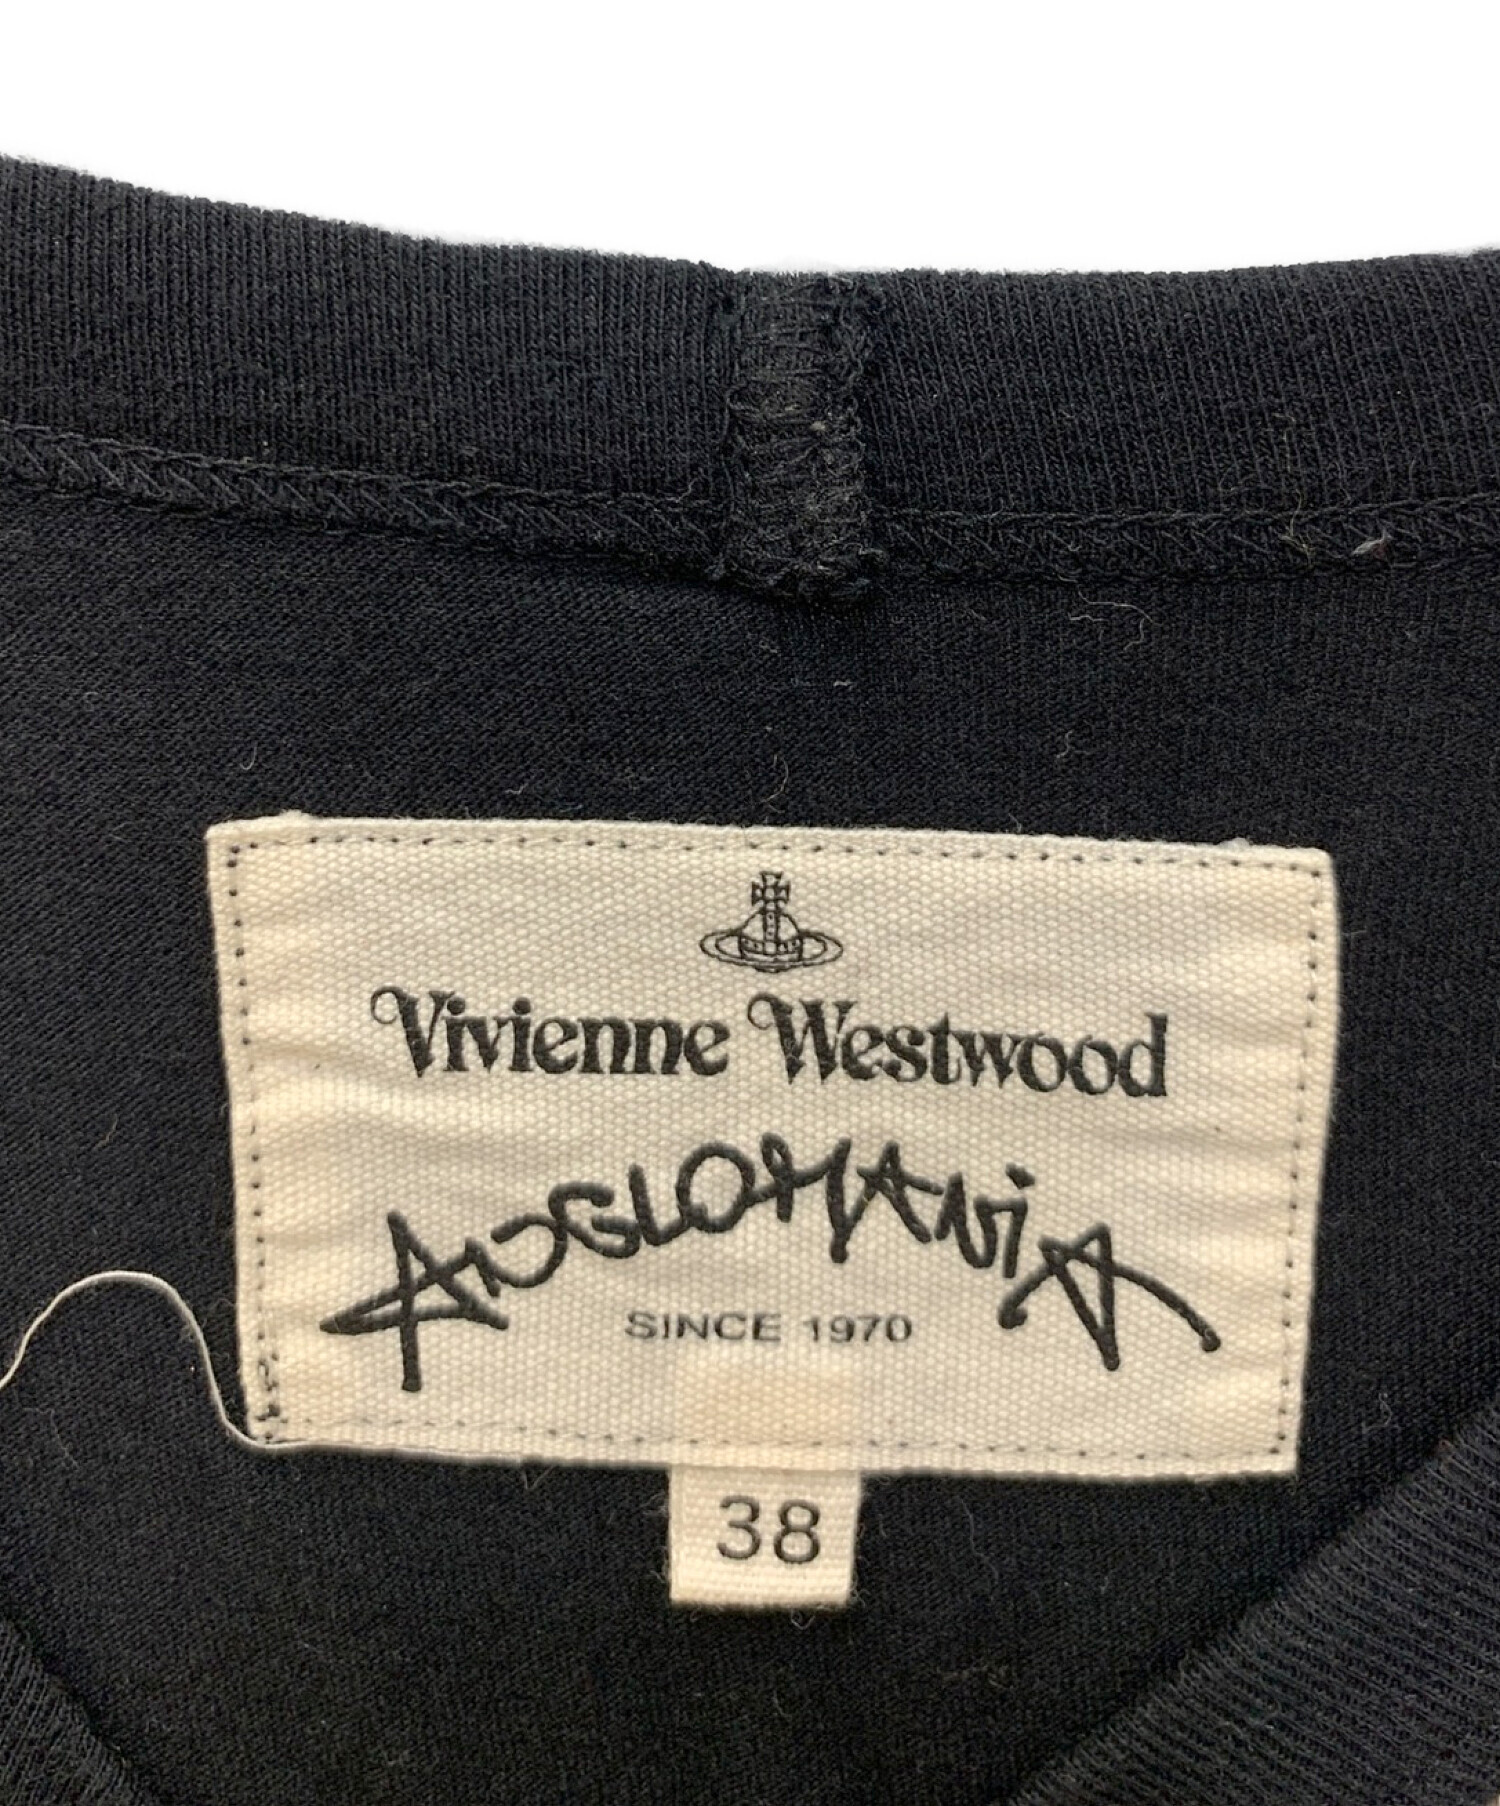 Vivienne Westwood ANGLOMANIA (ヴィヴィアンウエストウッド アングロマニア) オーバーサイズカットソー ブラック  サイズ:38